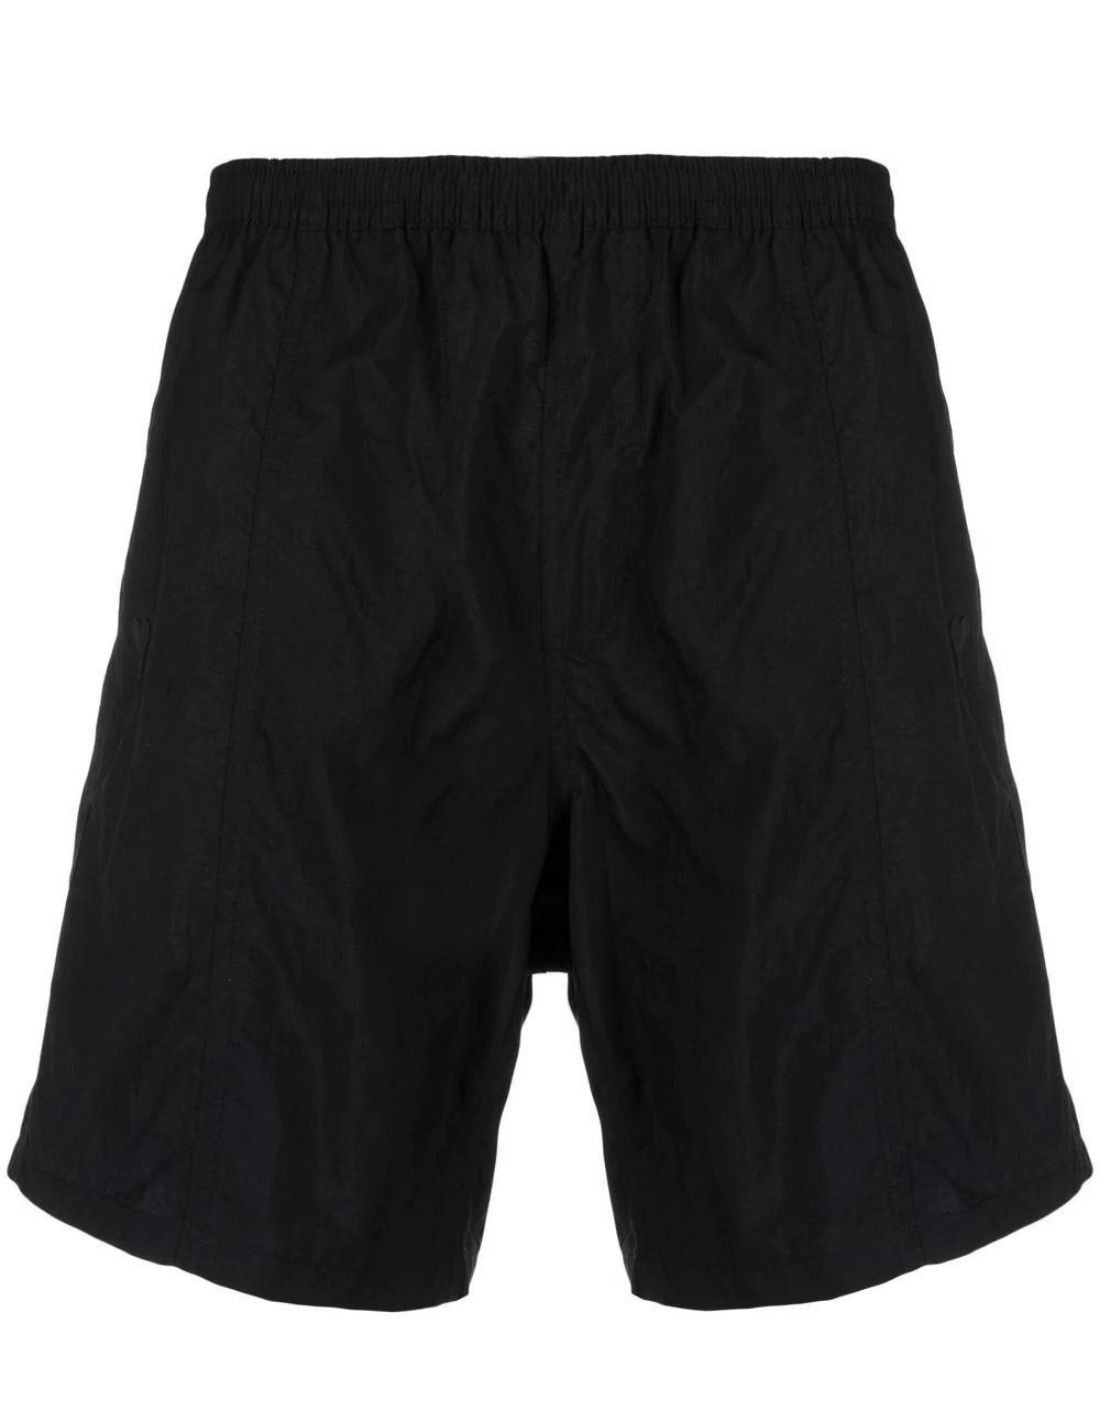 Black swim shorts with 